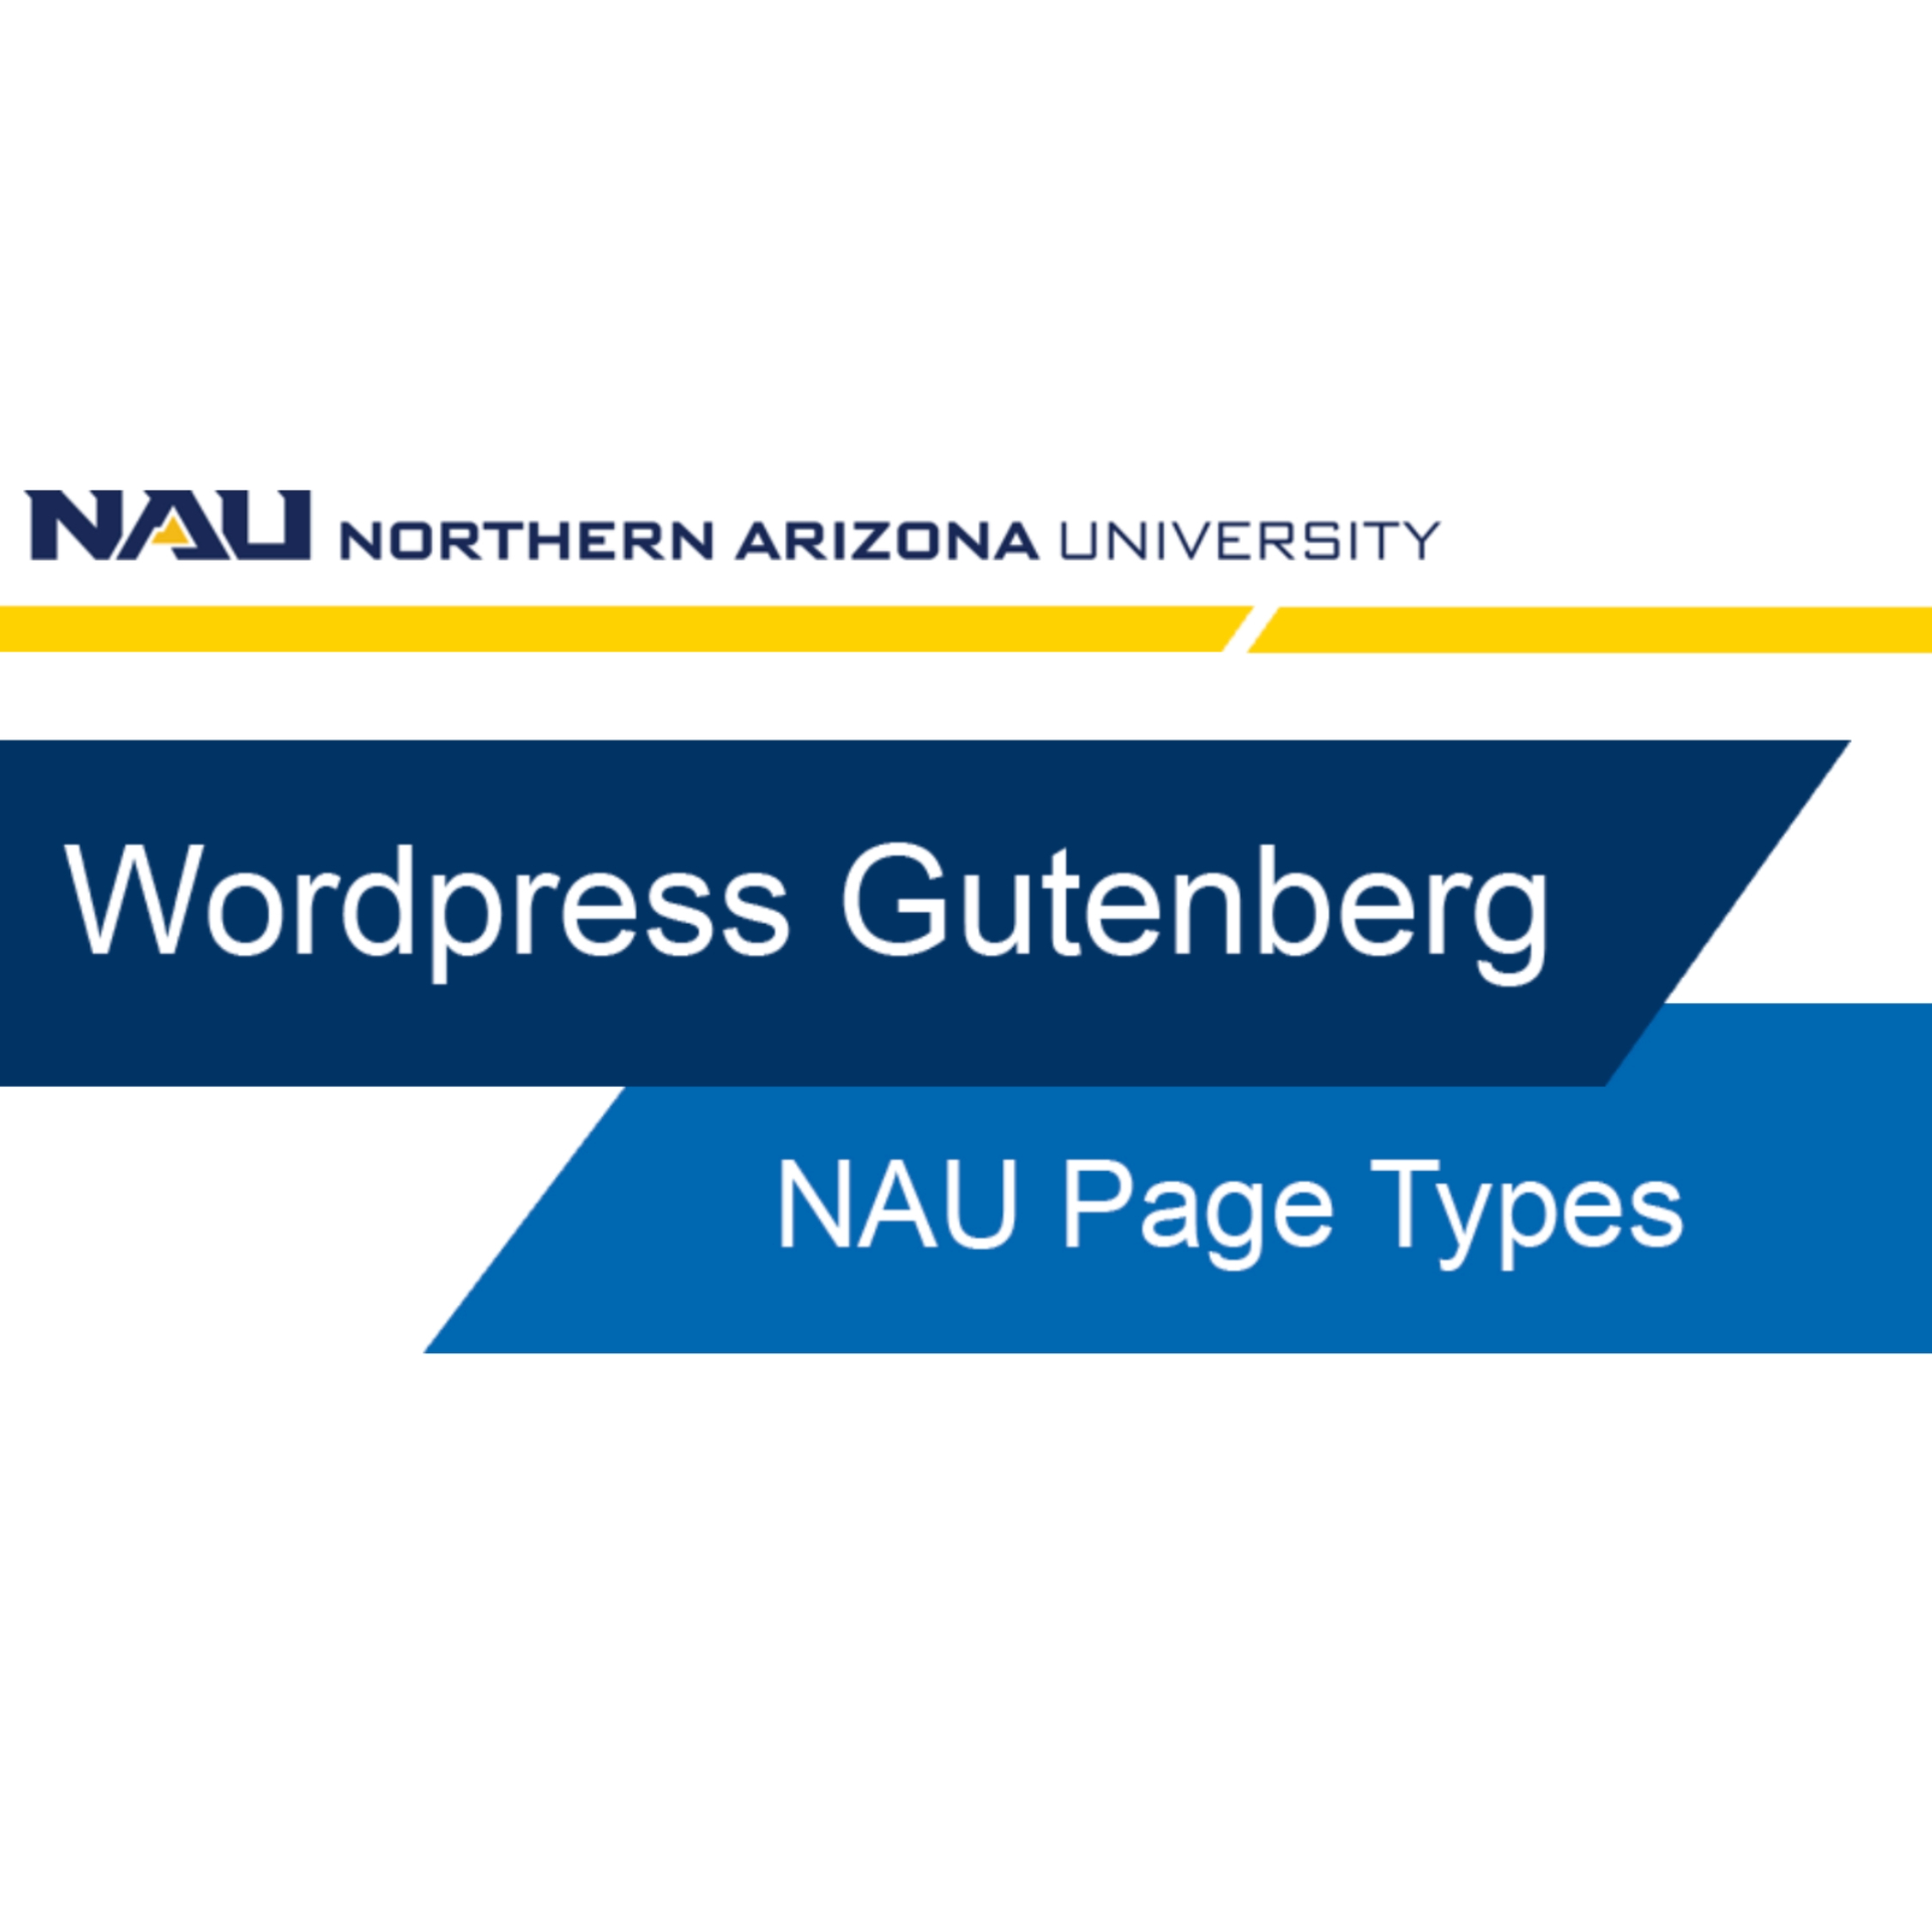 Thumbnail image of the Northern Arizona University WordPress Gutenberg tutorial start page, titled 'NAU Page Types'.